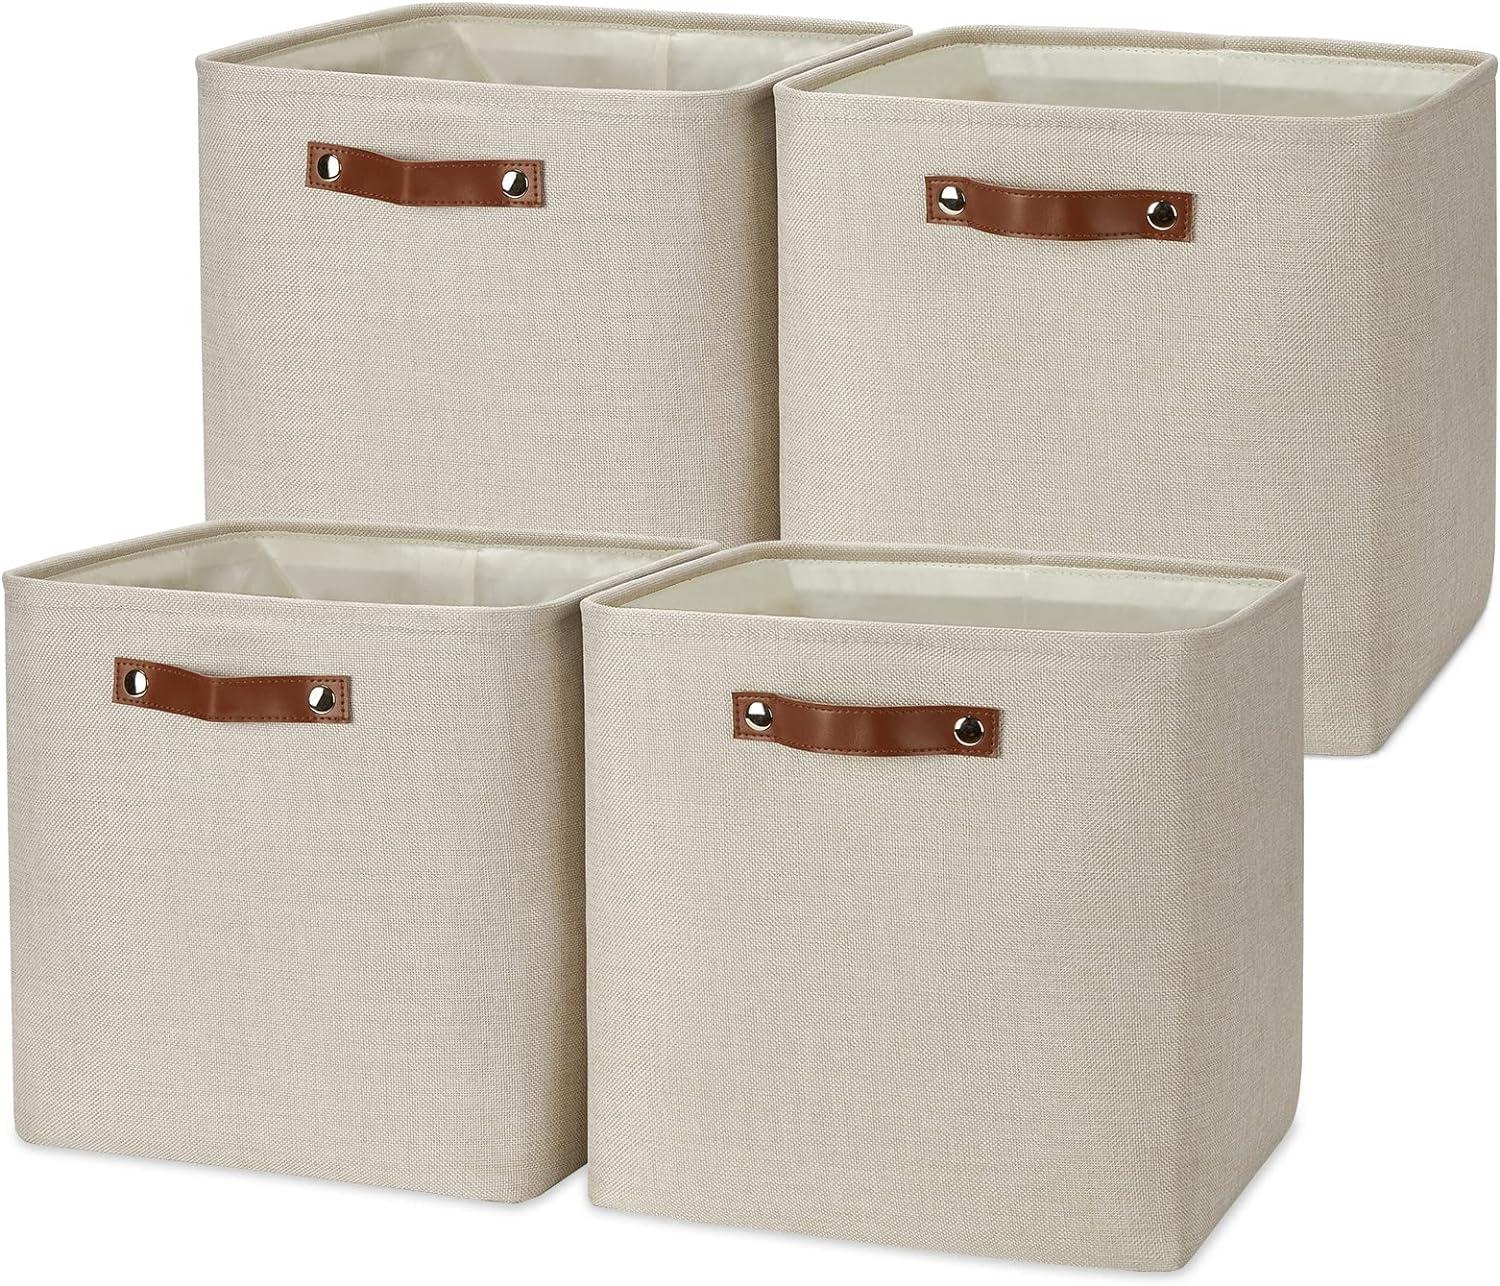 Temary Cube Storage Baskets 13 Inch Cube Storage Bins 4 Pack Baskets for Organizing Shelves Fabric Cloth Bins for Shelf, Nursery, Home, Closet(Beige)